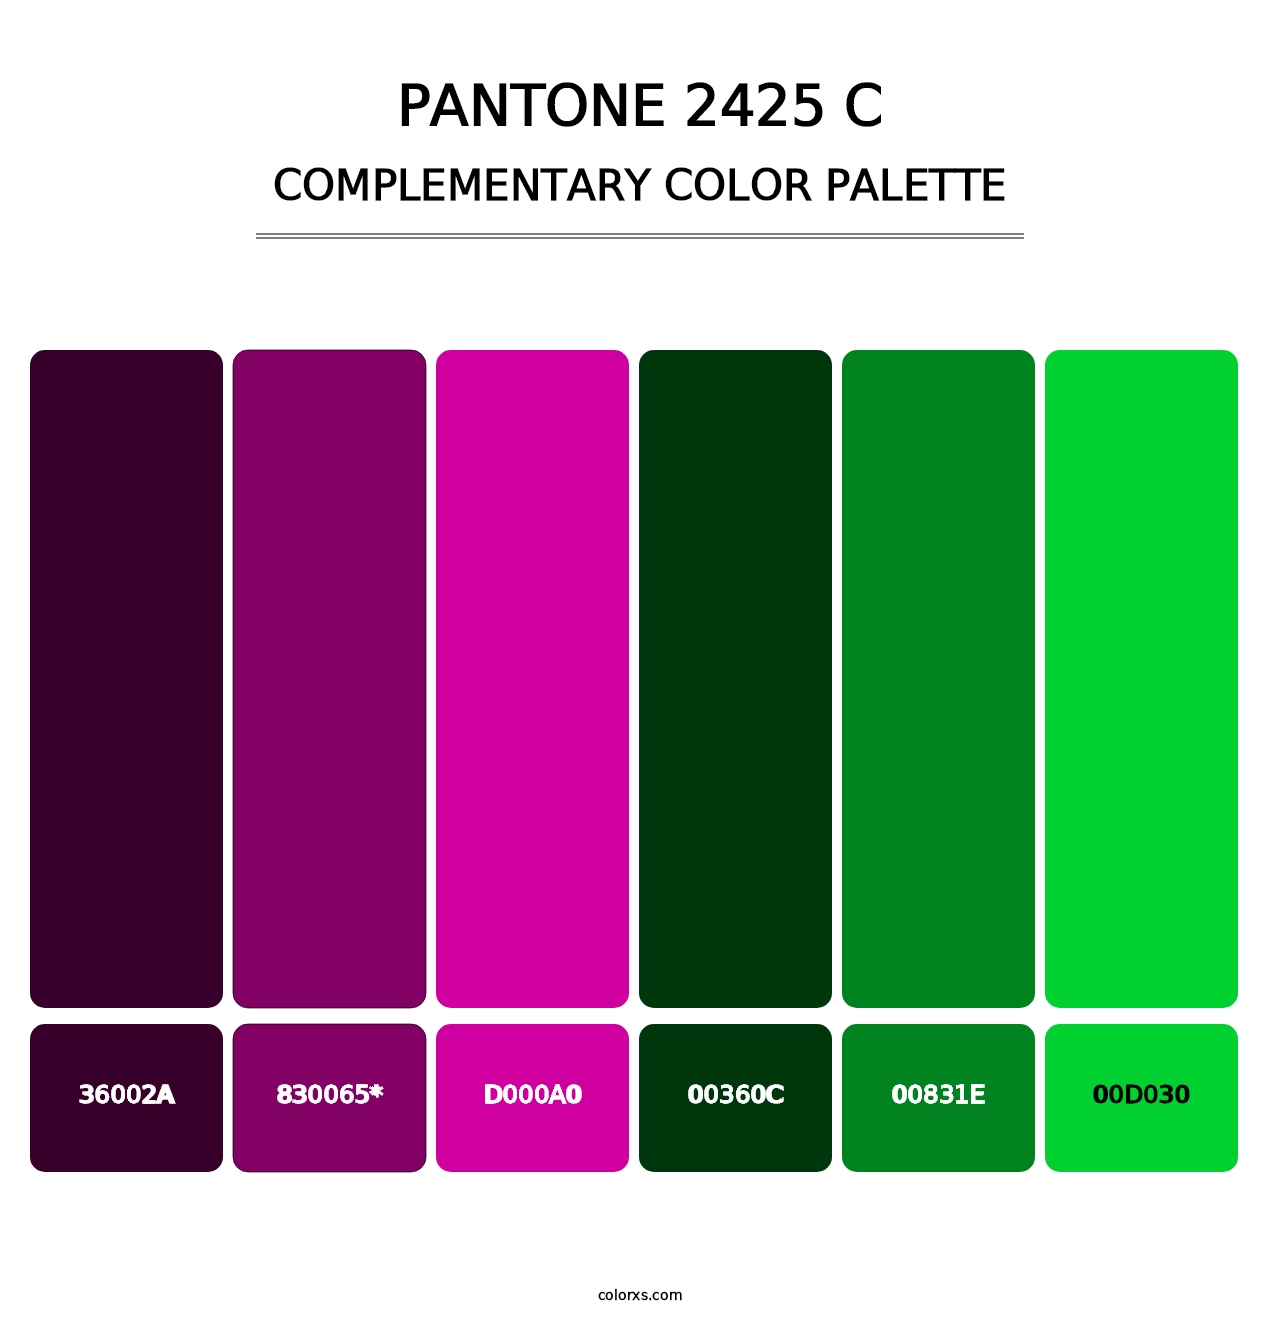 PANTONE 2425 C - Complementary Color Palette